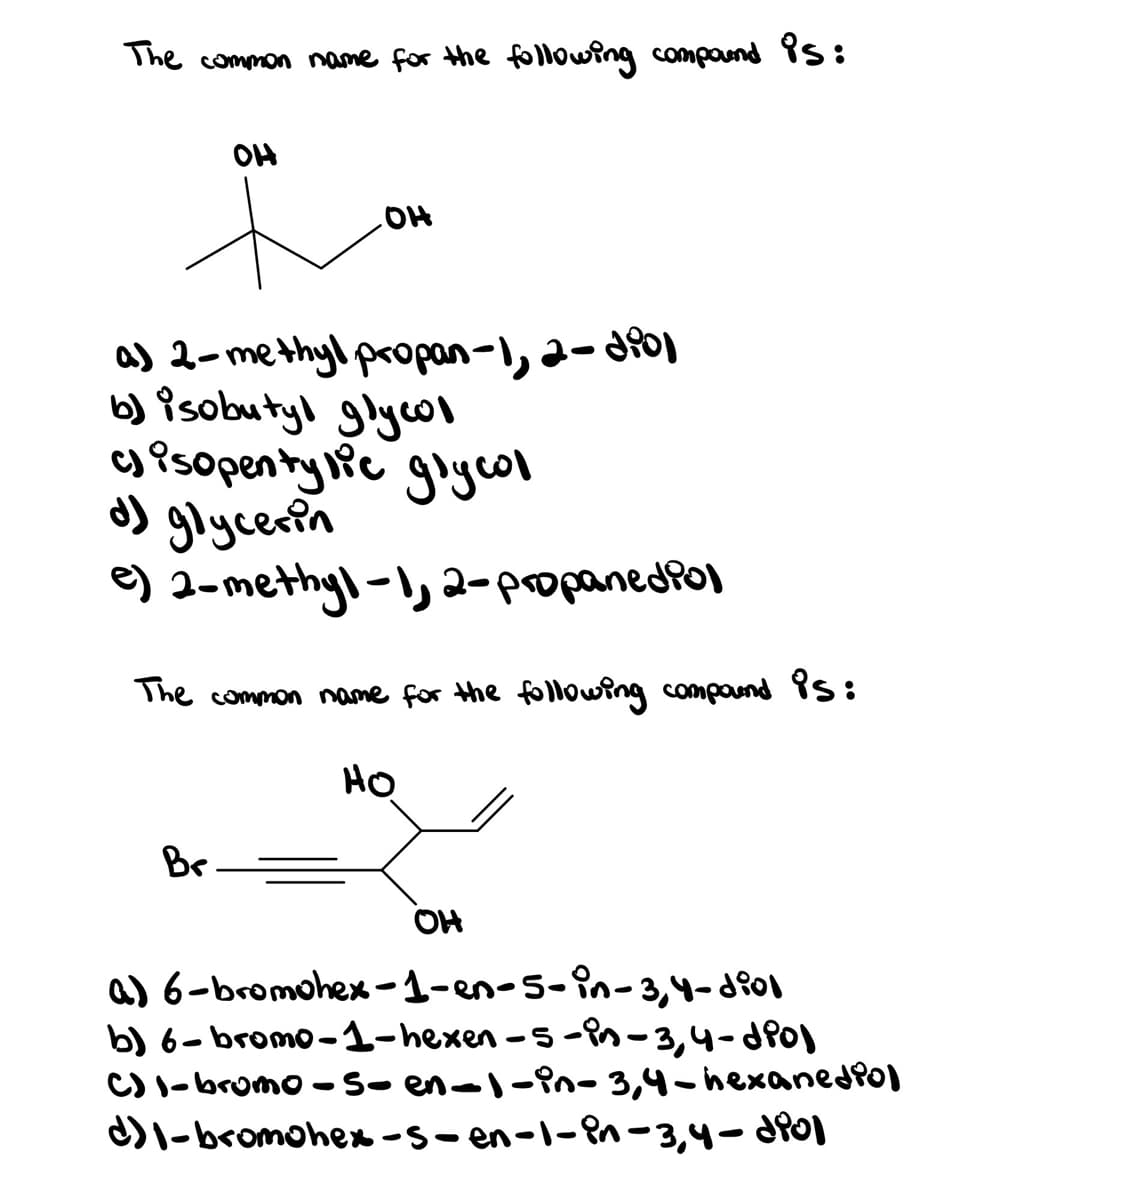 The common name for the following compaund Ps:
OH
a) 2-methyl propan-1, a- dfoj
b) isobutyl glycol
g Psopenty ic giycol
d) glycerin
e) 2-methyl-l, 2-popanedPol
The common name for the following compaund Ps:
HO
Br
OH
a) 6-bromohex -1-en-5-in-3,4-d801
b) 6-bromo-1-hexen -5 -in-3,4-dPo)
C) I-bromo -So en-l-Pn- 3,4-hexanedPol
DI-bromohex -s- en-1-Pn-3,4- d80)
